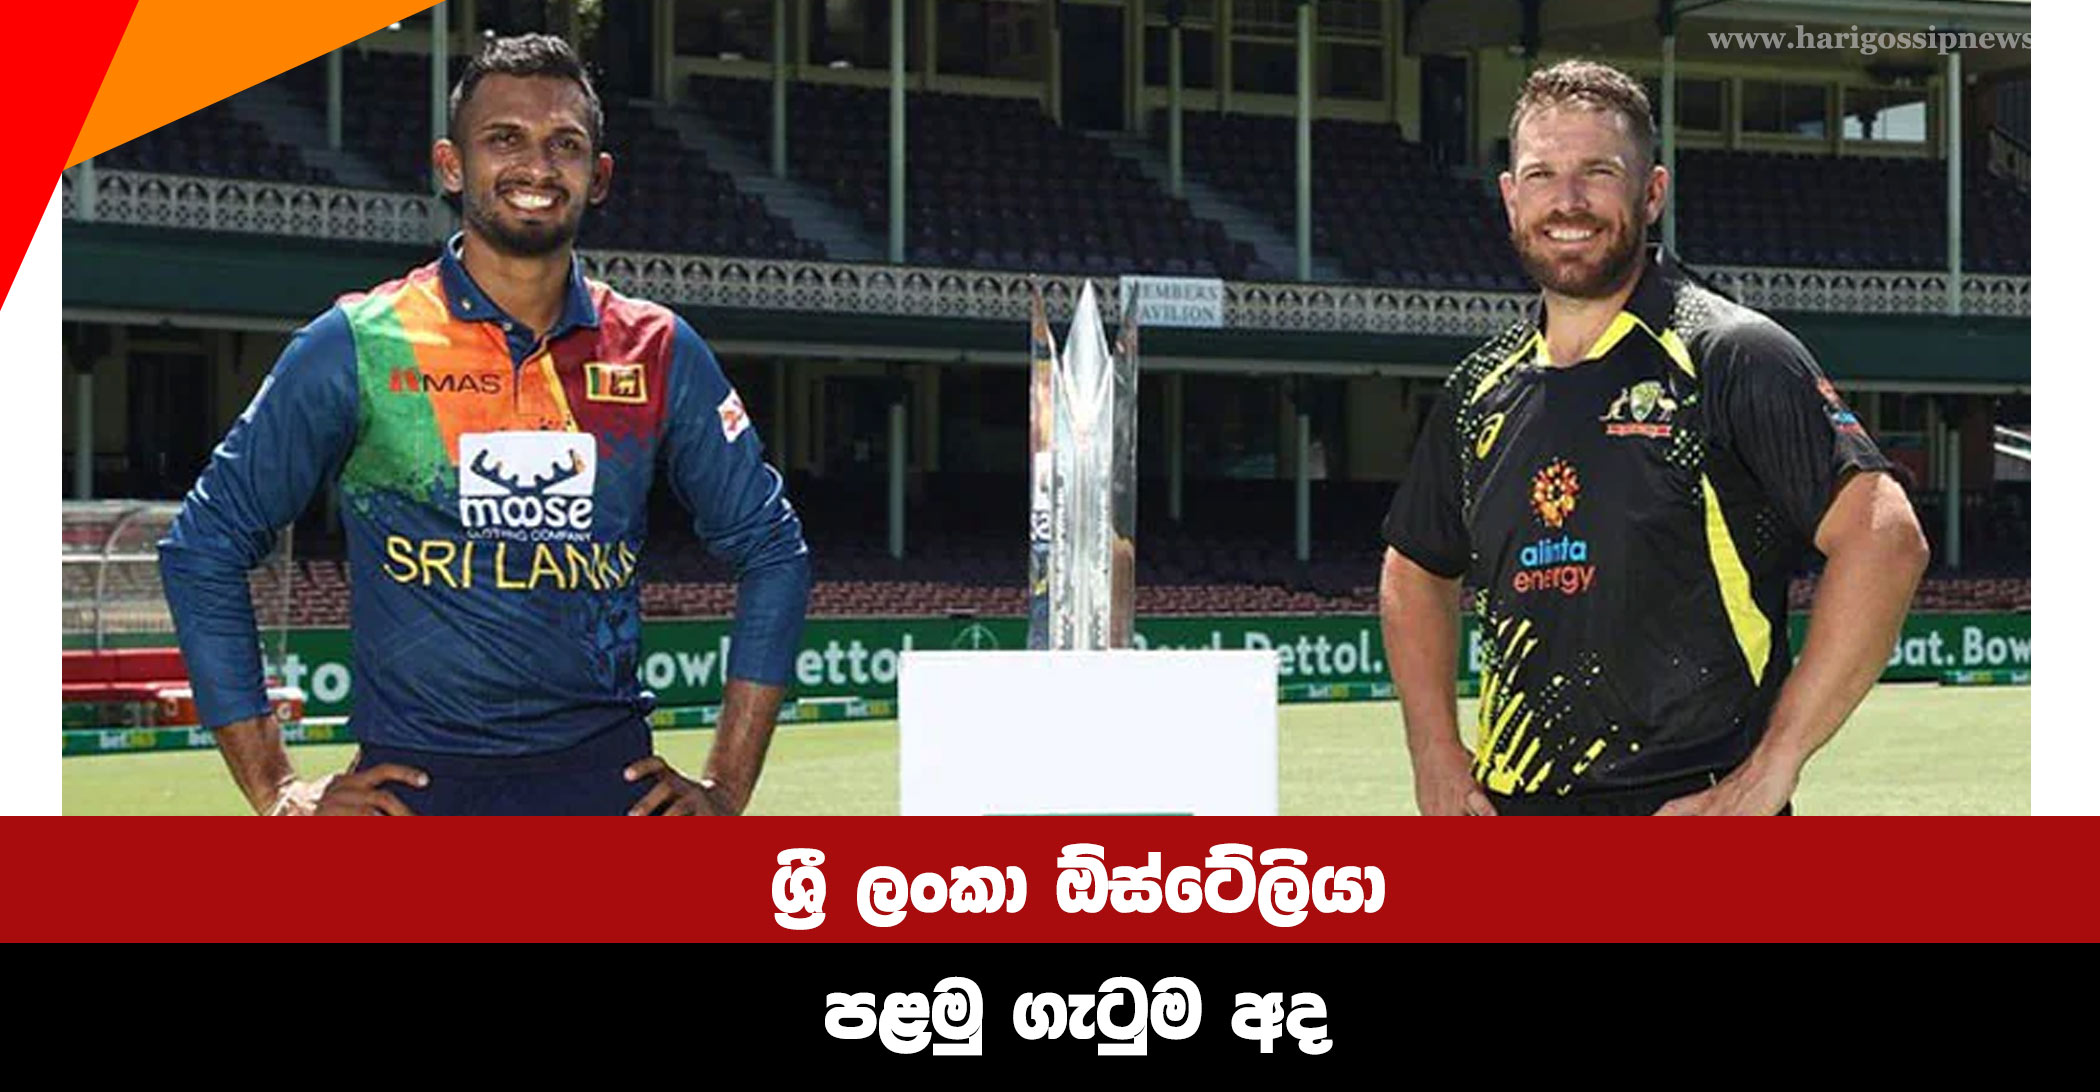 Sri Lanka-Australia first clash today